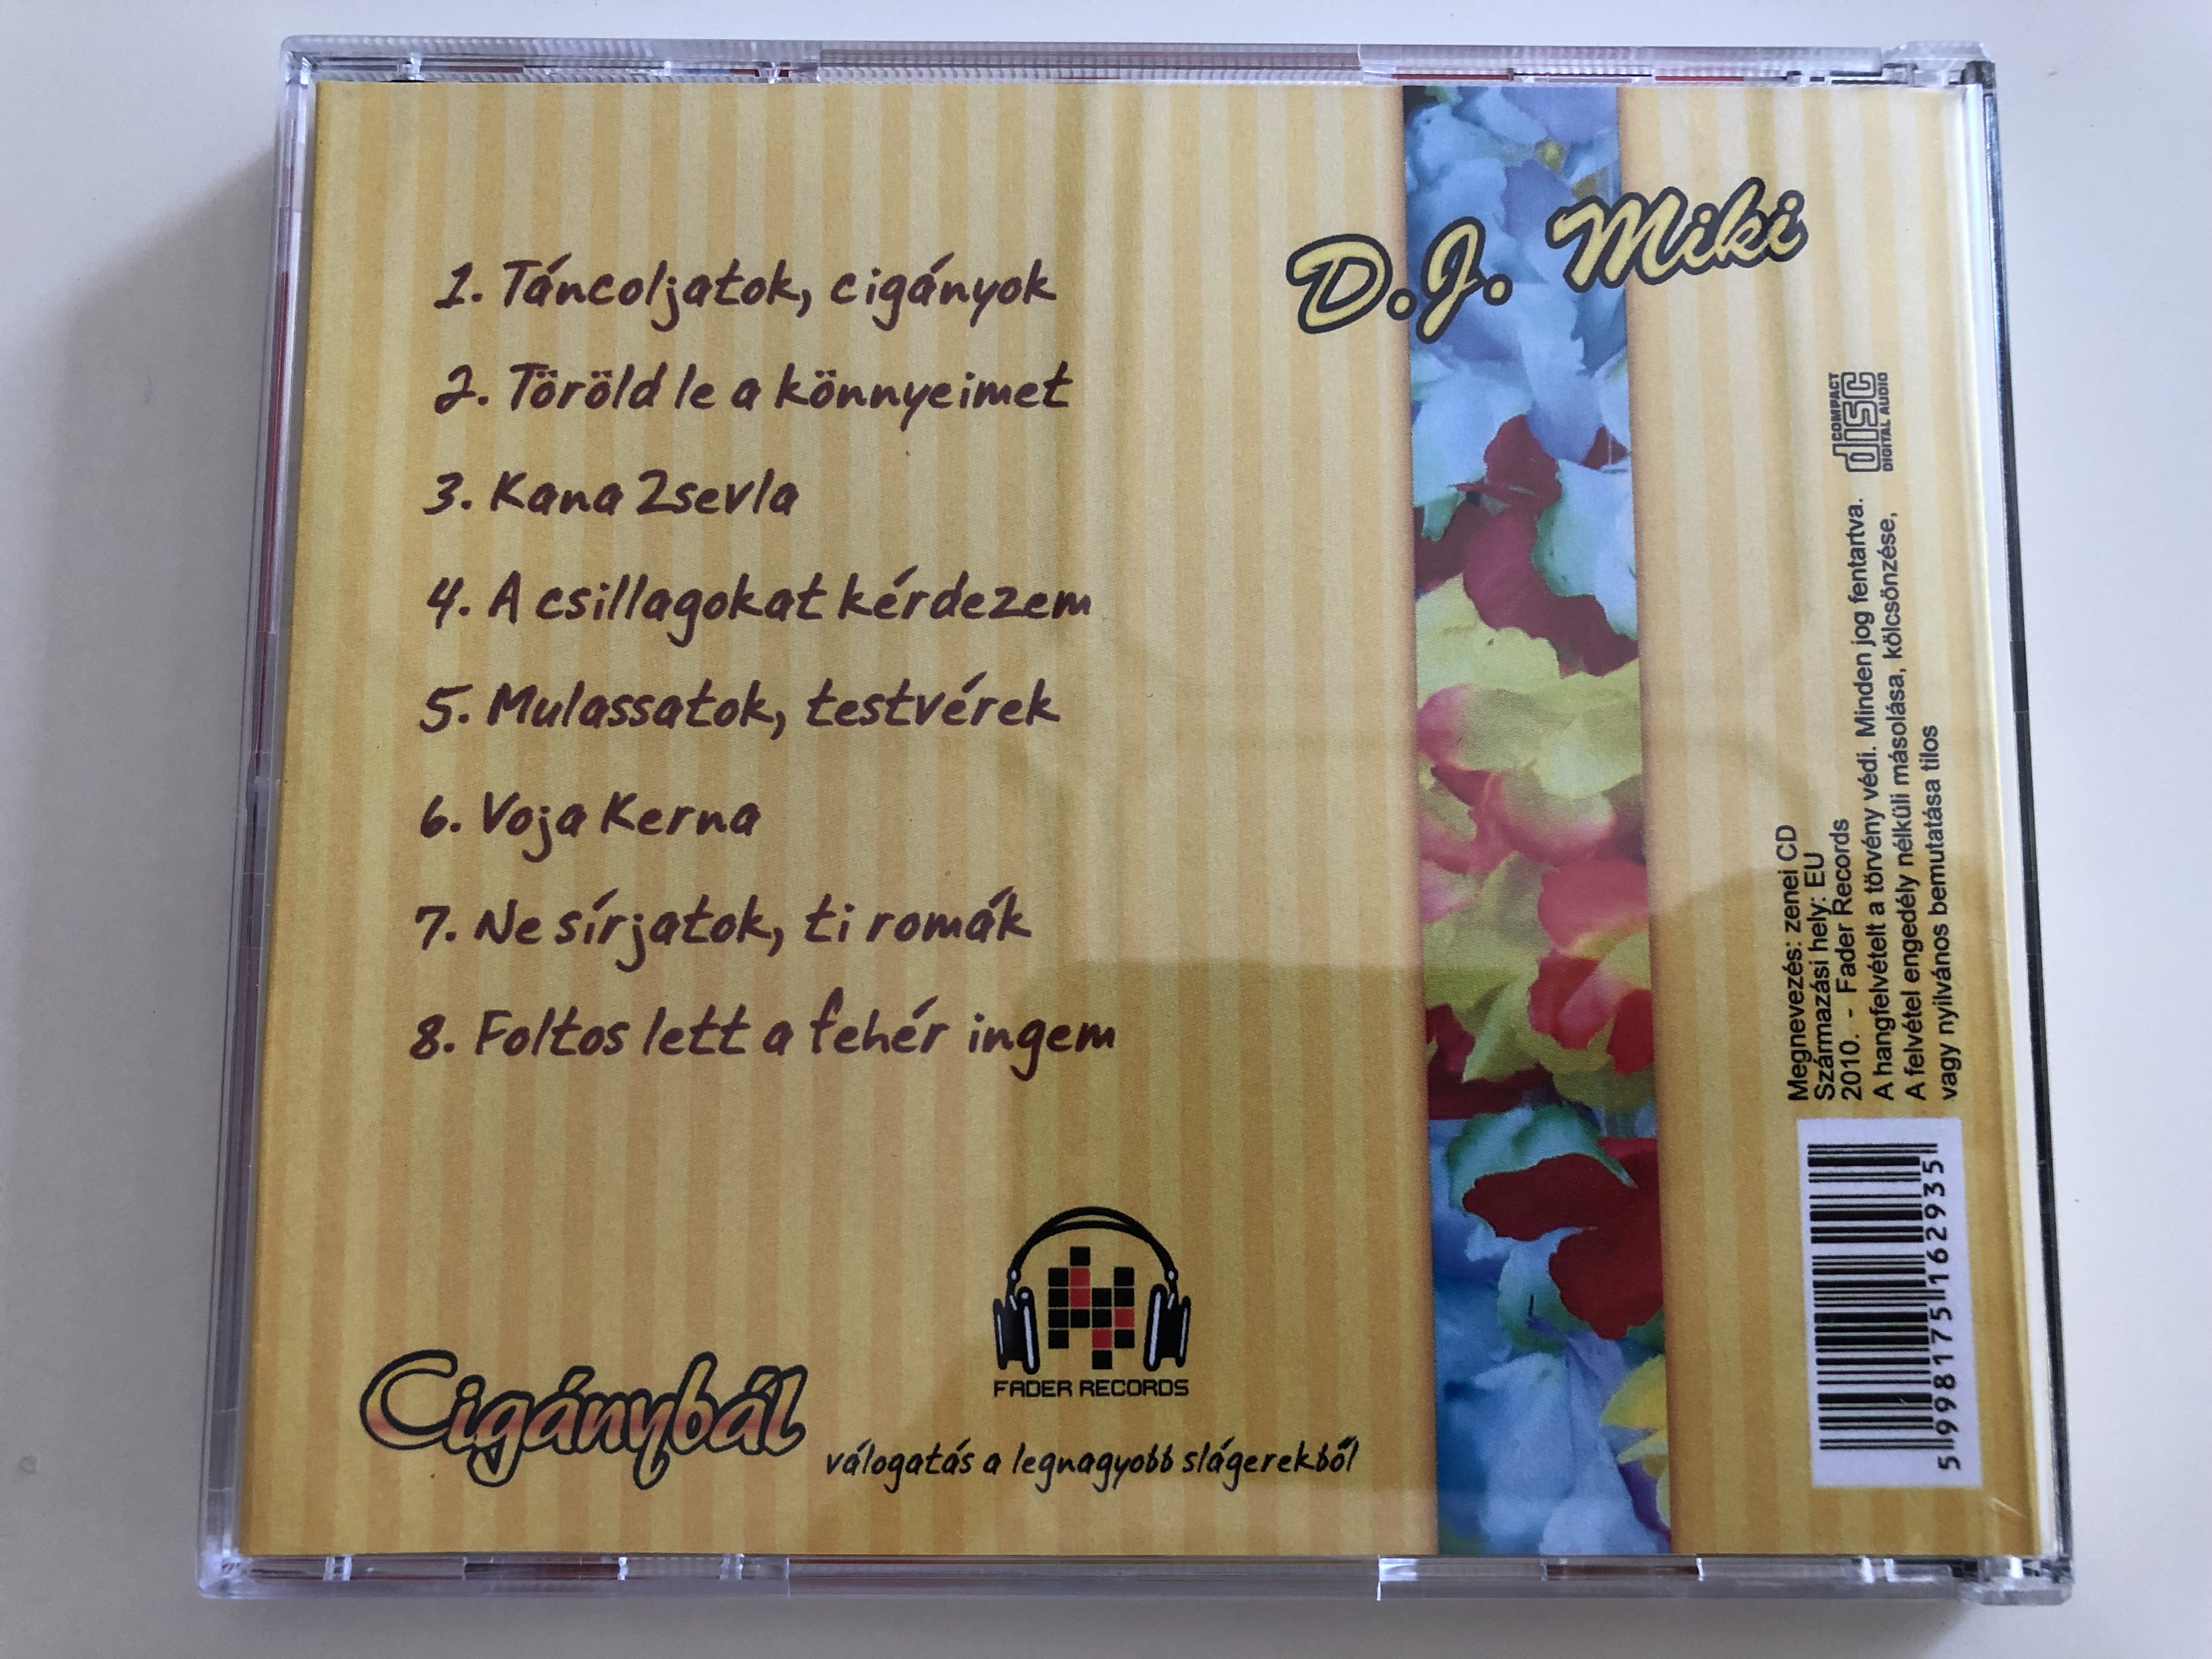 d.-j.-miki-cig-nyb-l-audio-cd-2010-hungarian-gypsy-romani-music-fader-002-4-.jpg